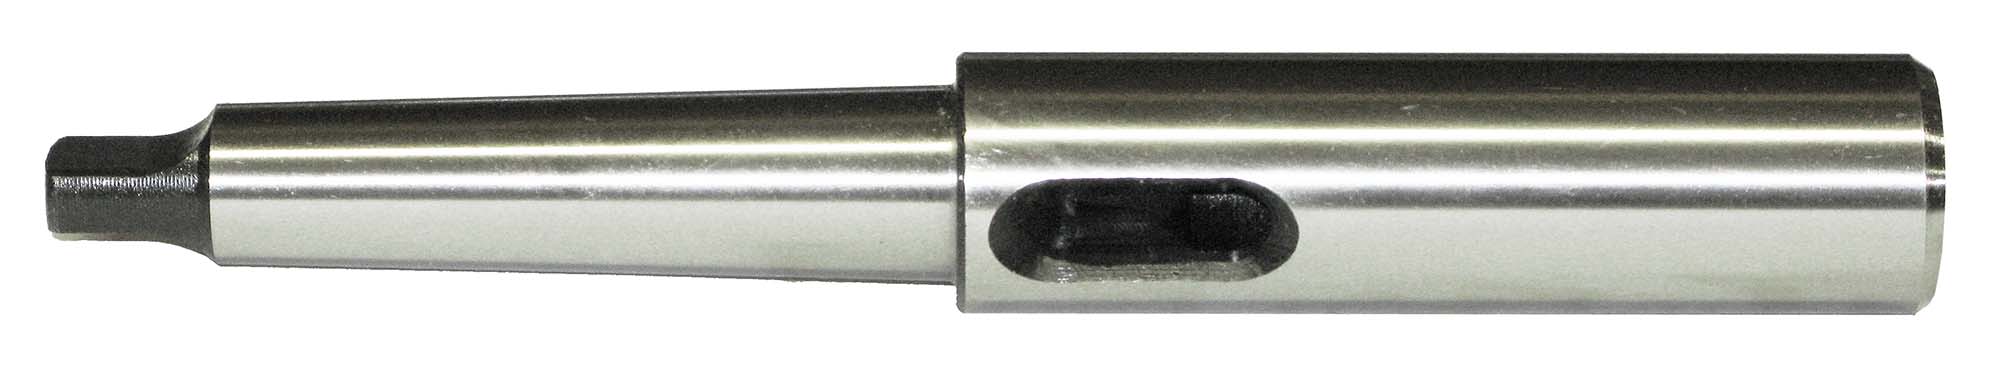 1 Morse Taper(hole)-1 Morse Taper(shank) Extension Socket, SL1-1